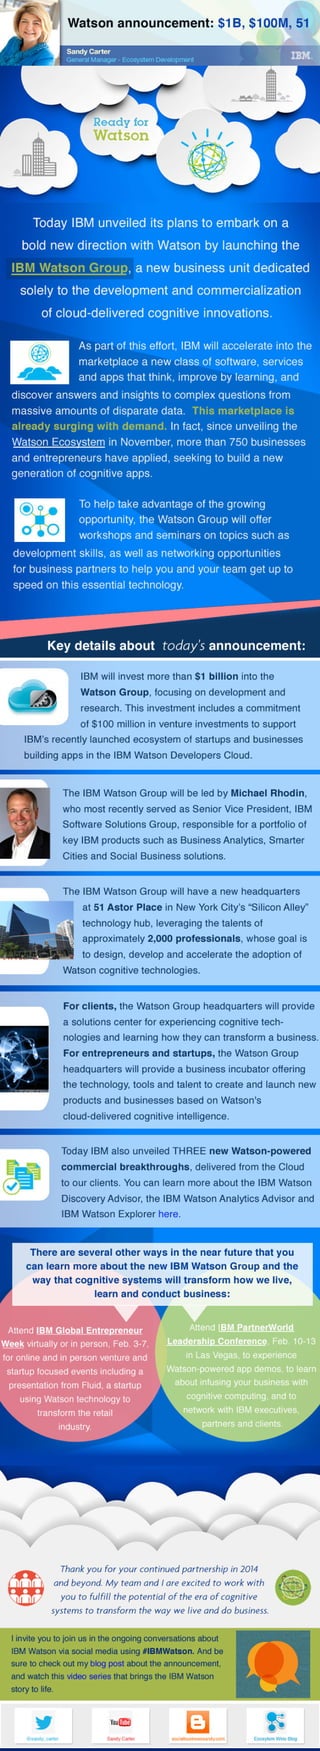 IBM Watson Group Announcement